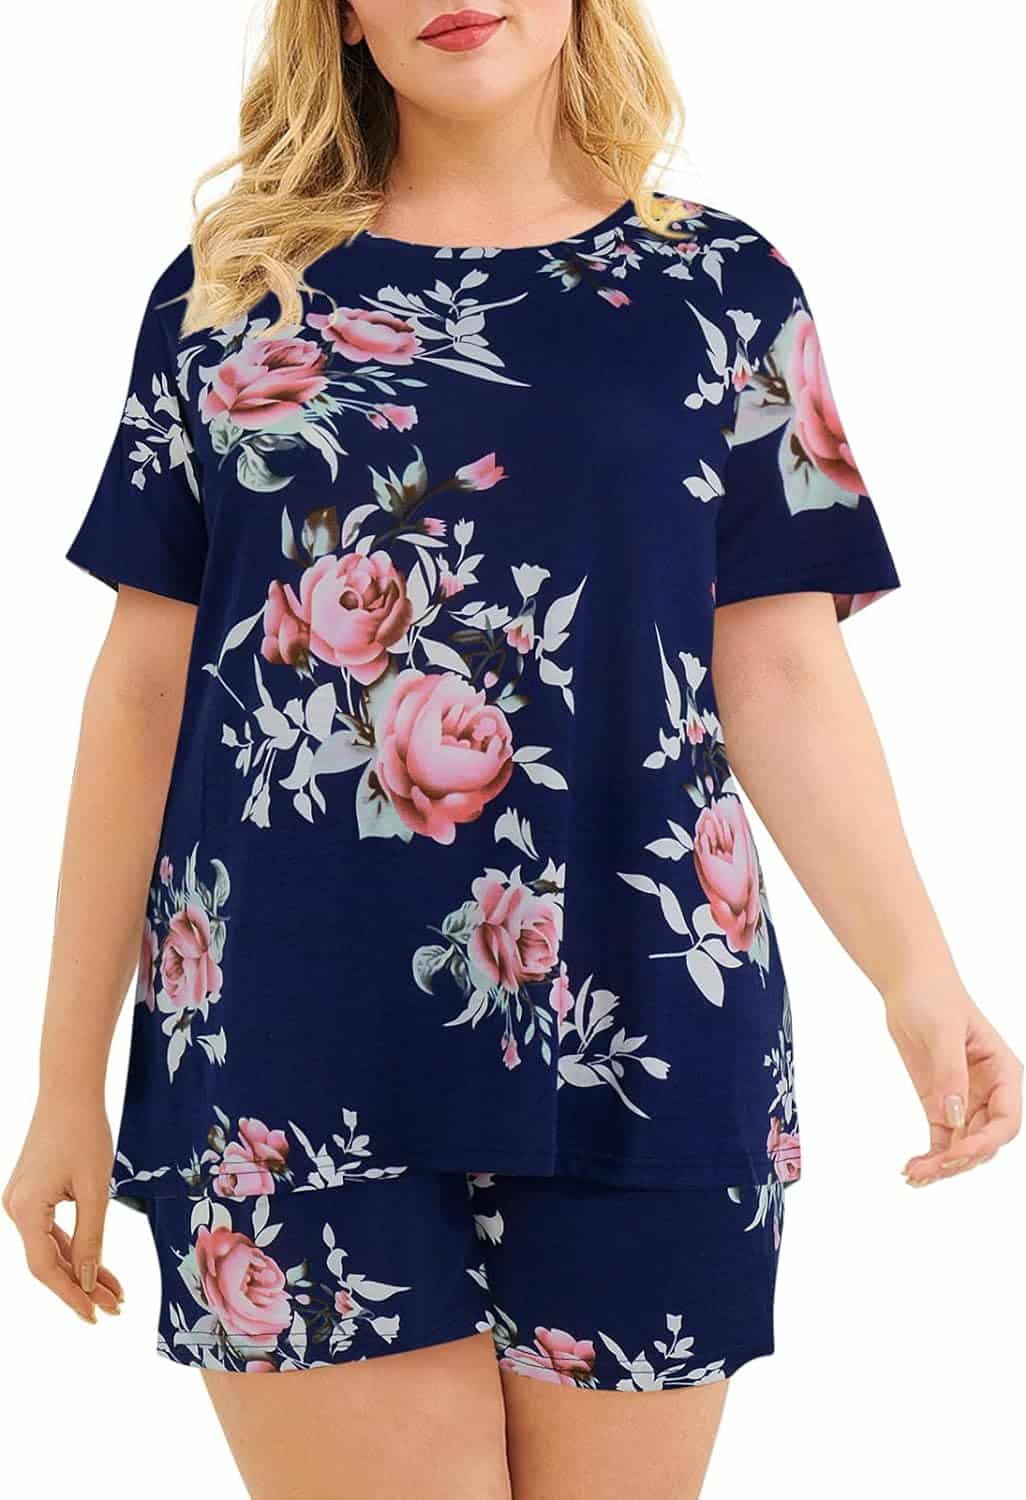 Celkuser Women’s Plus Size Short Sleeve Summer Casual 2 Piece Pajama Sets Loungewear Sleepwear Pjs Pocket 3X 4X 5X CEL109 – A Cozy and Stylish Choice